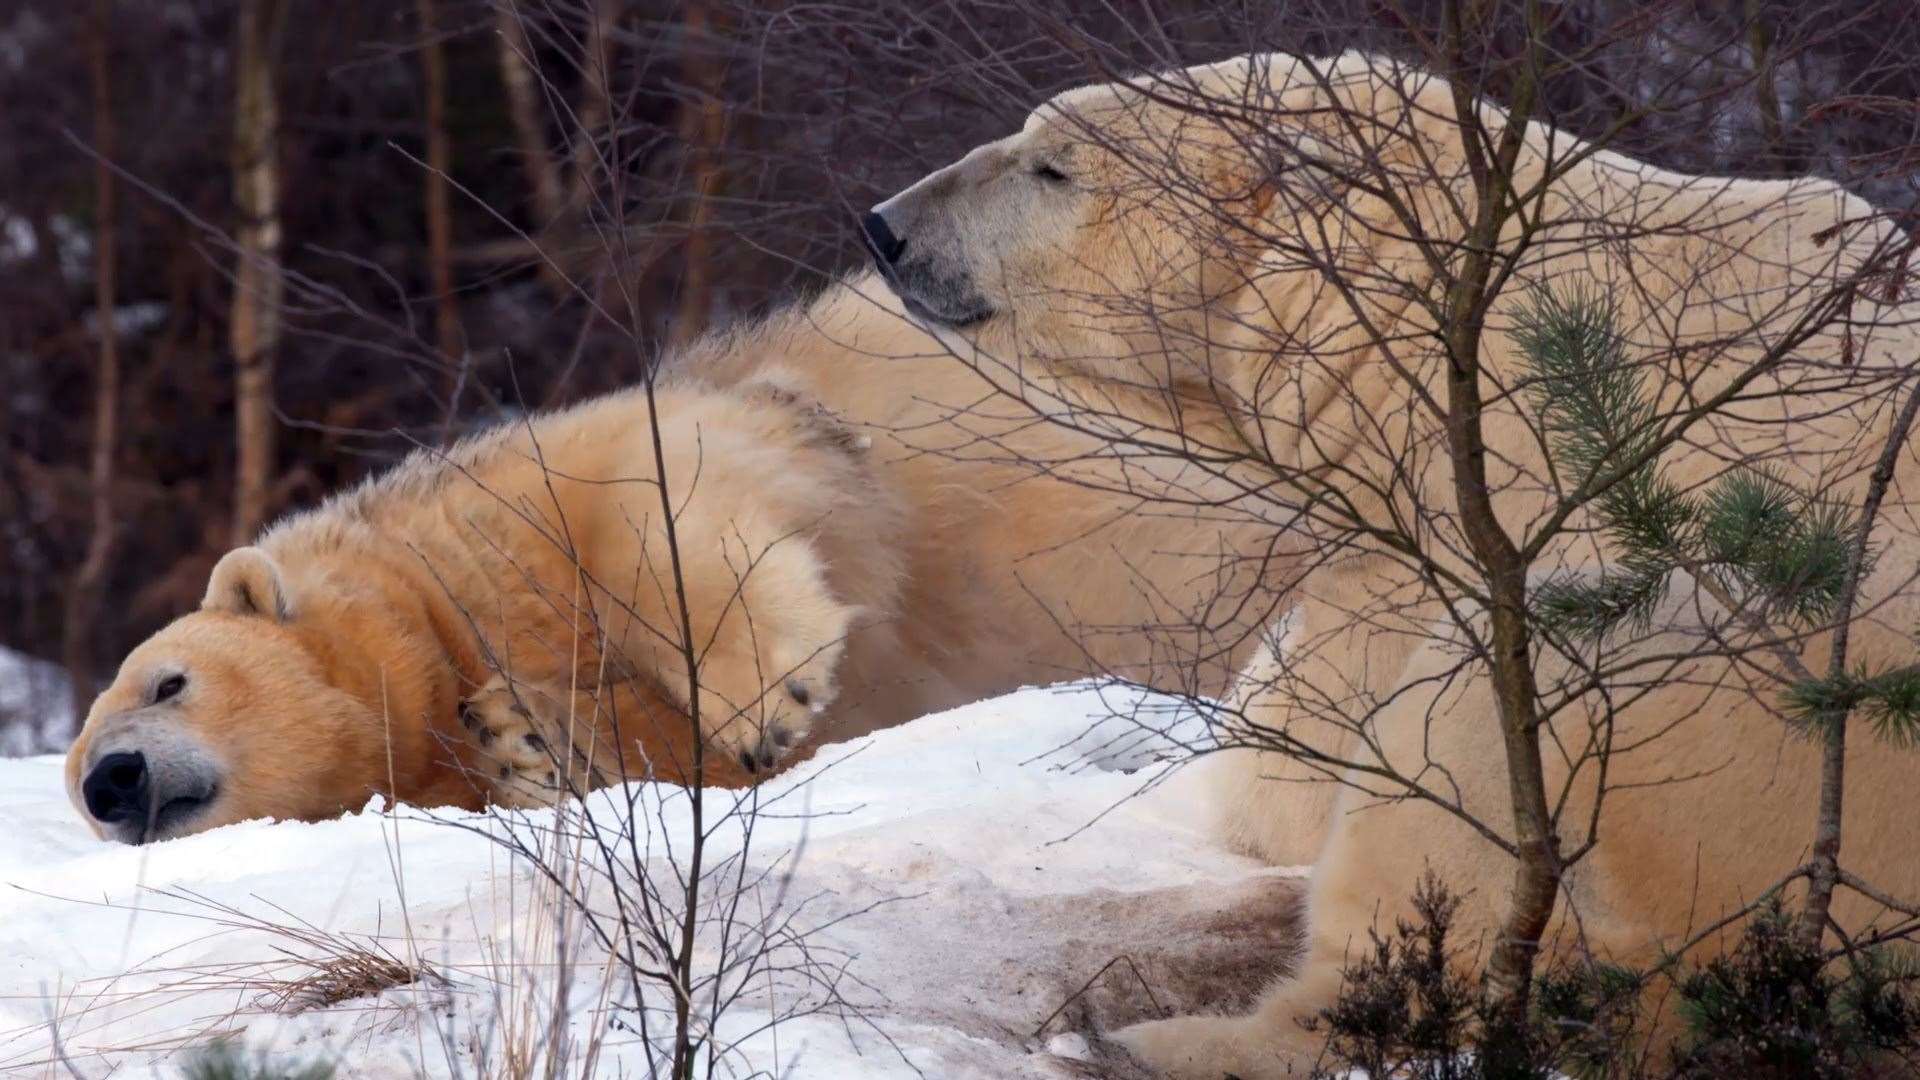 The polar bears in love.